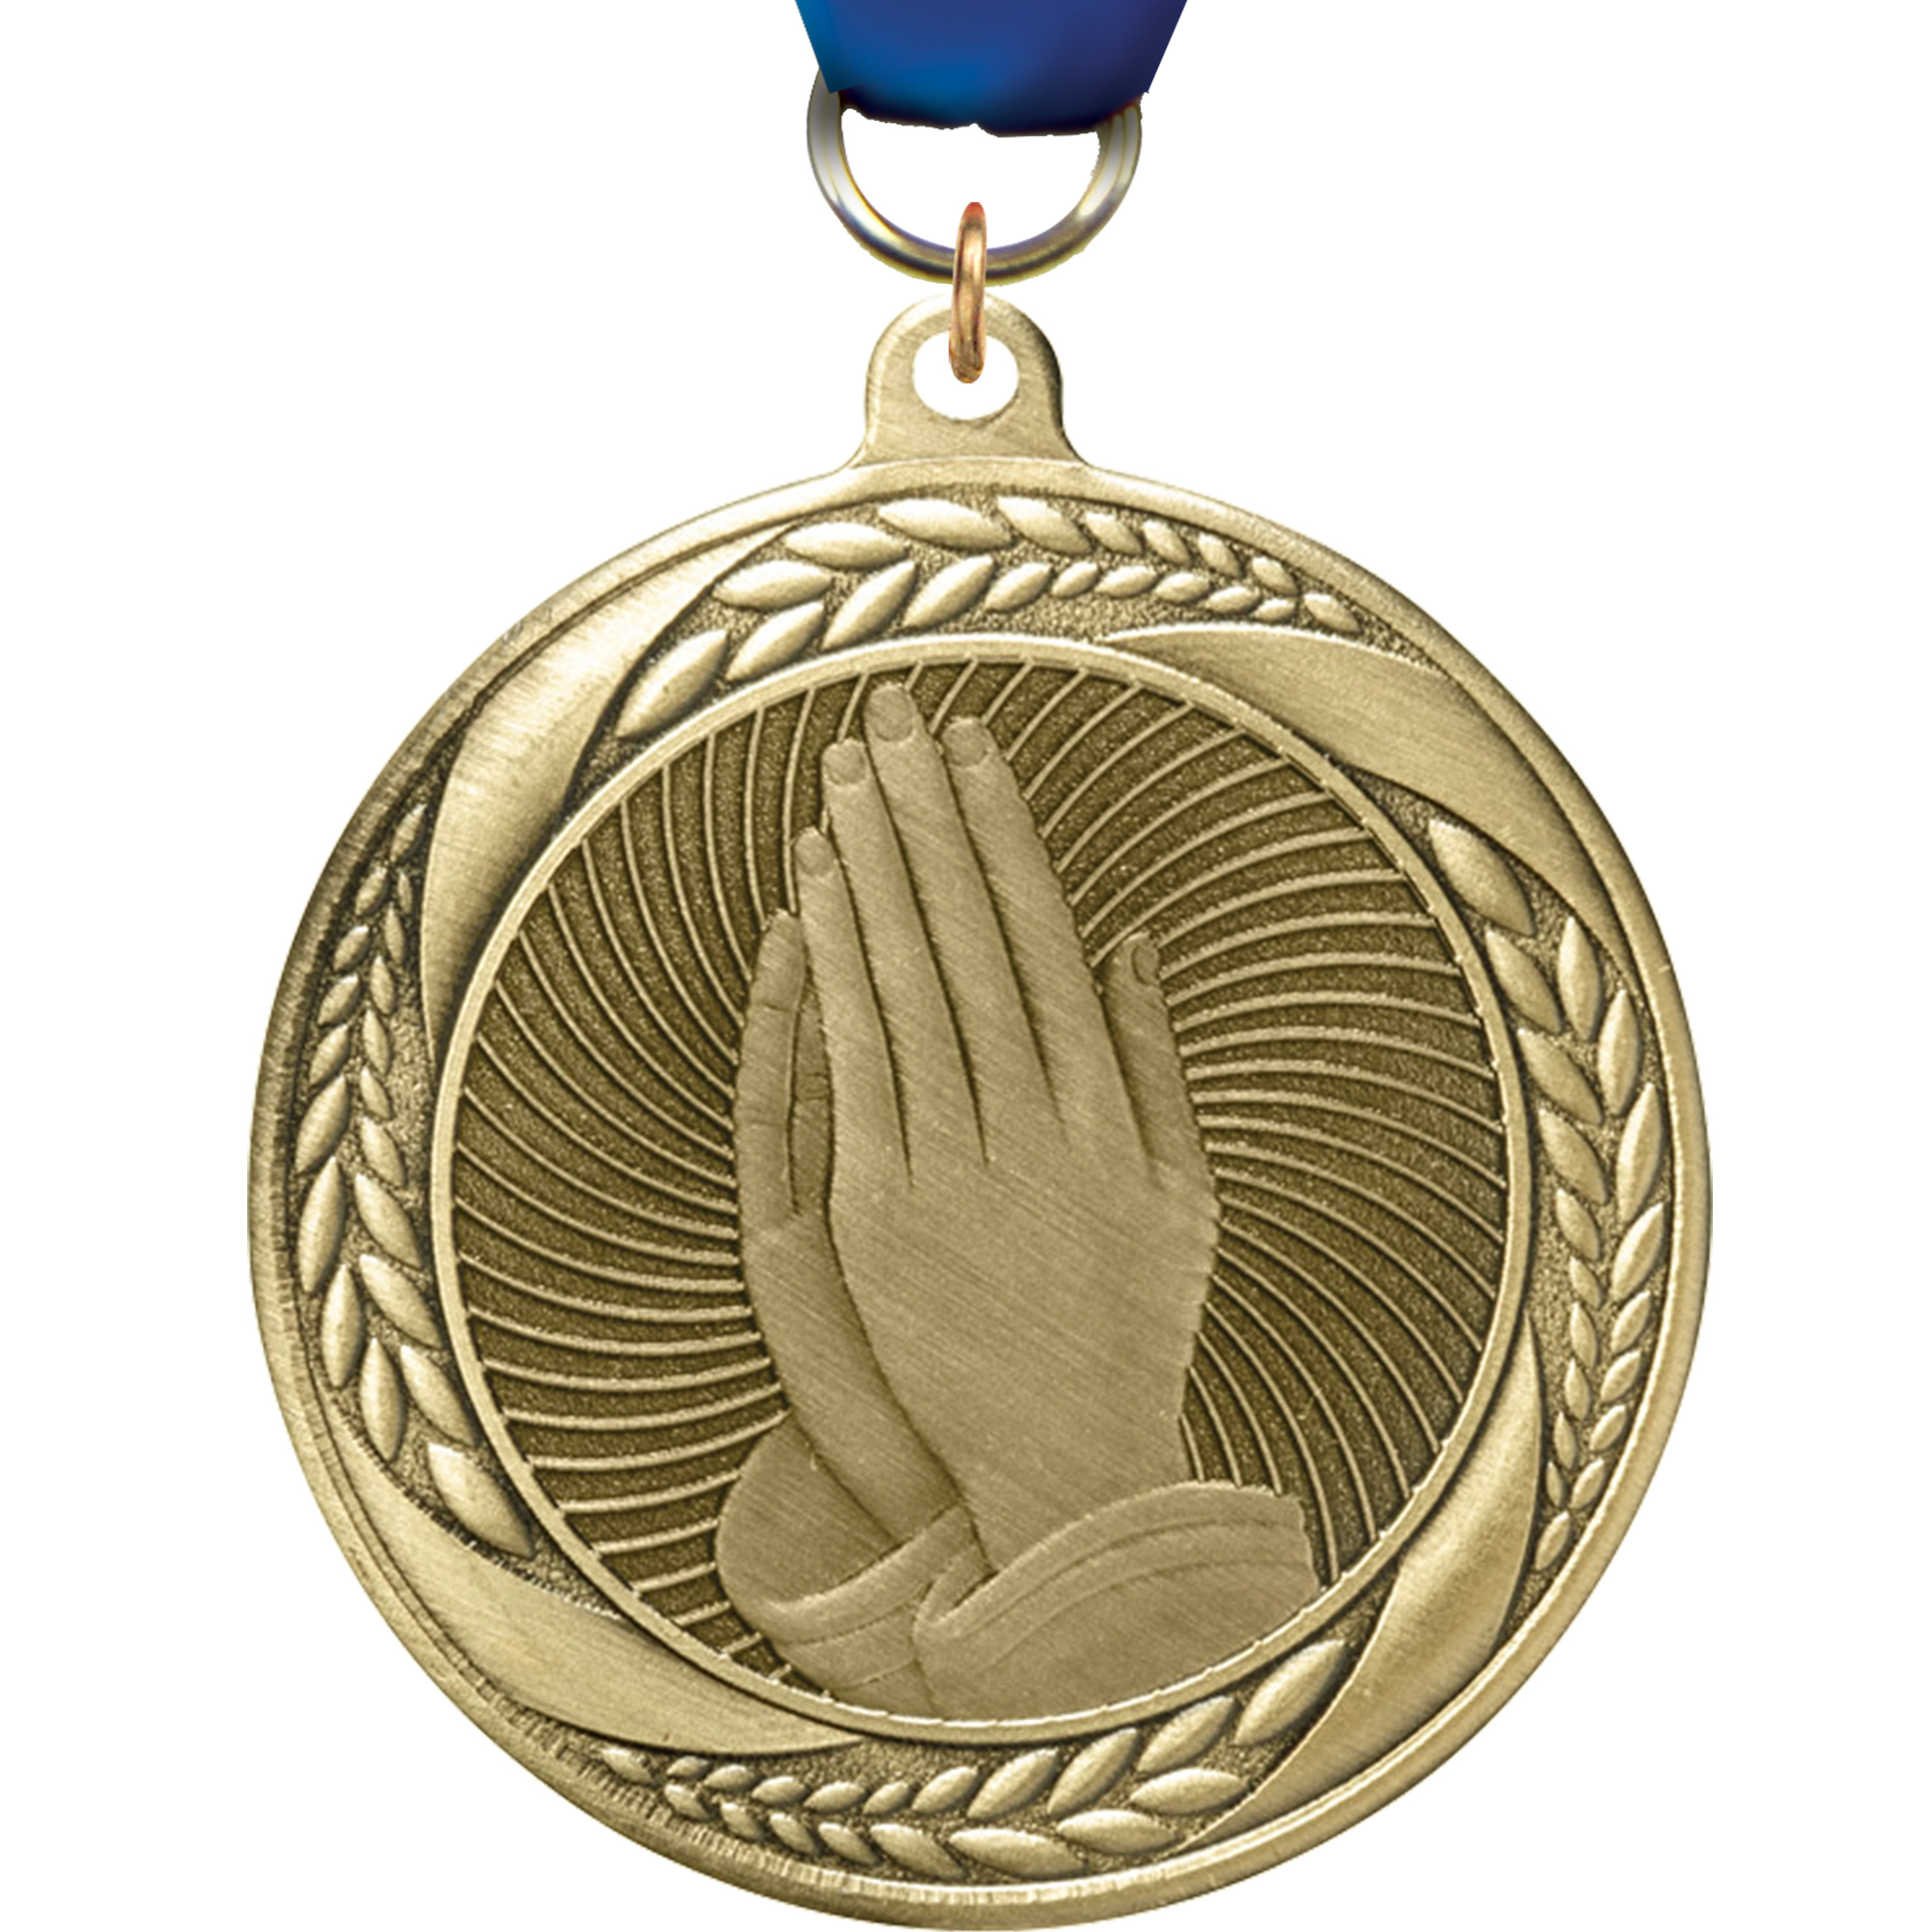 Praying Hands Laurel Wreath Medal